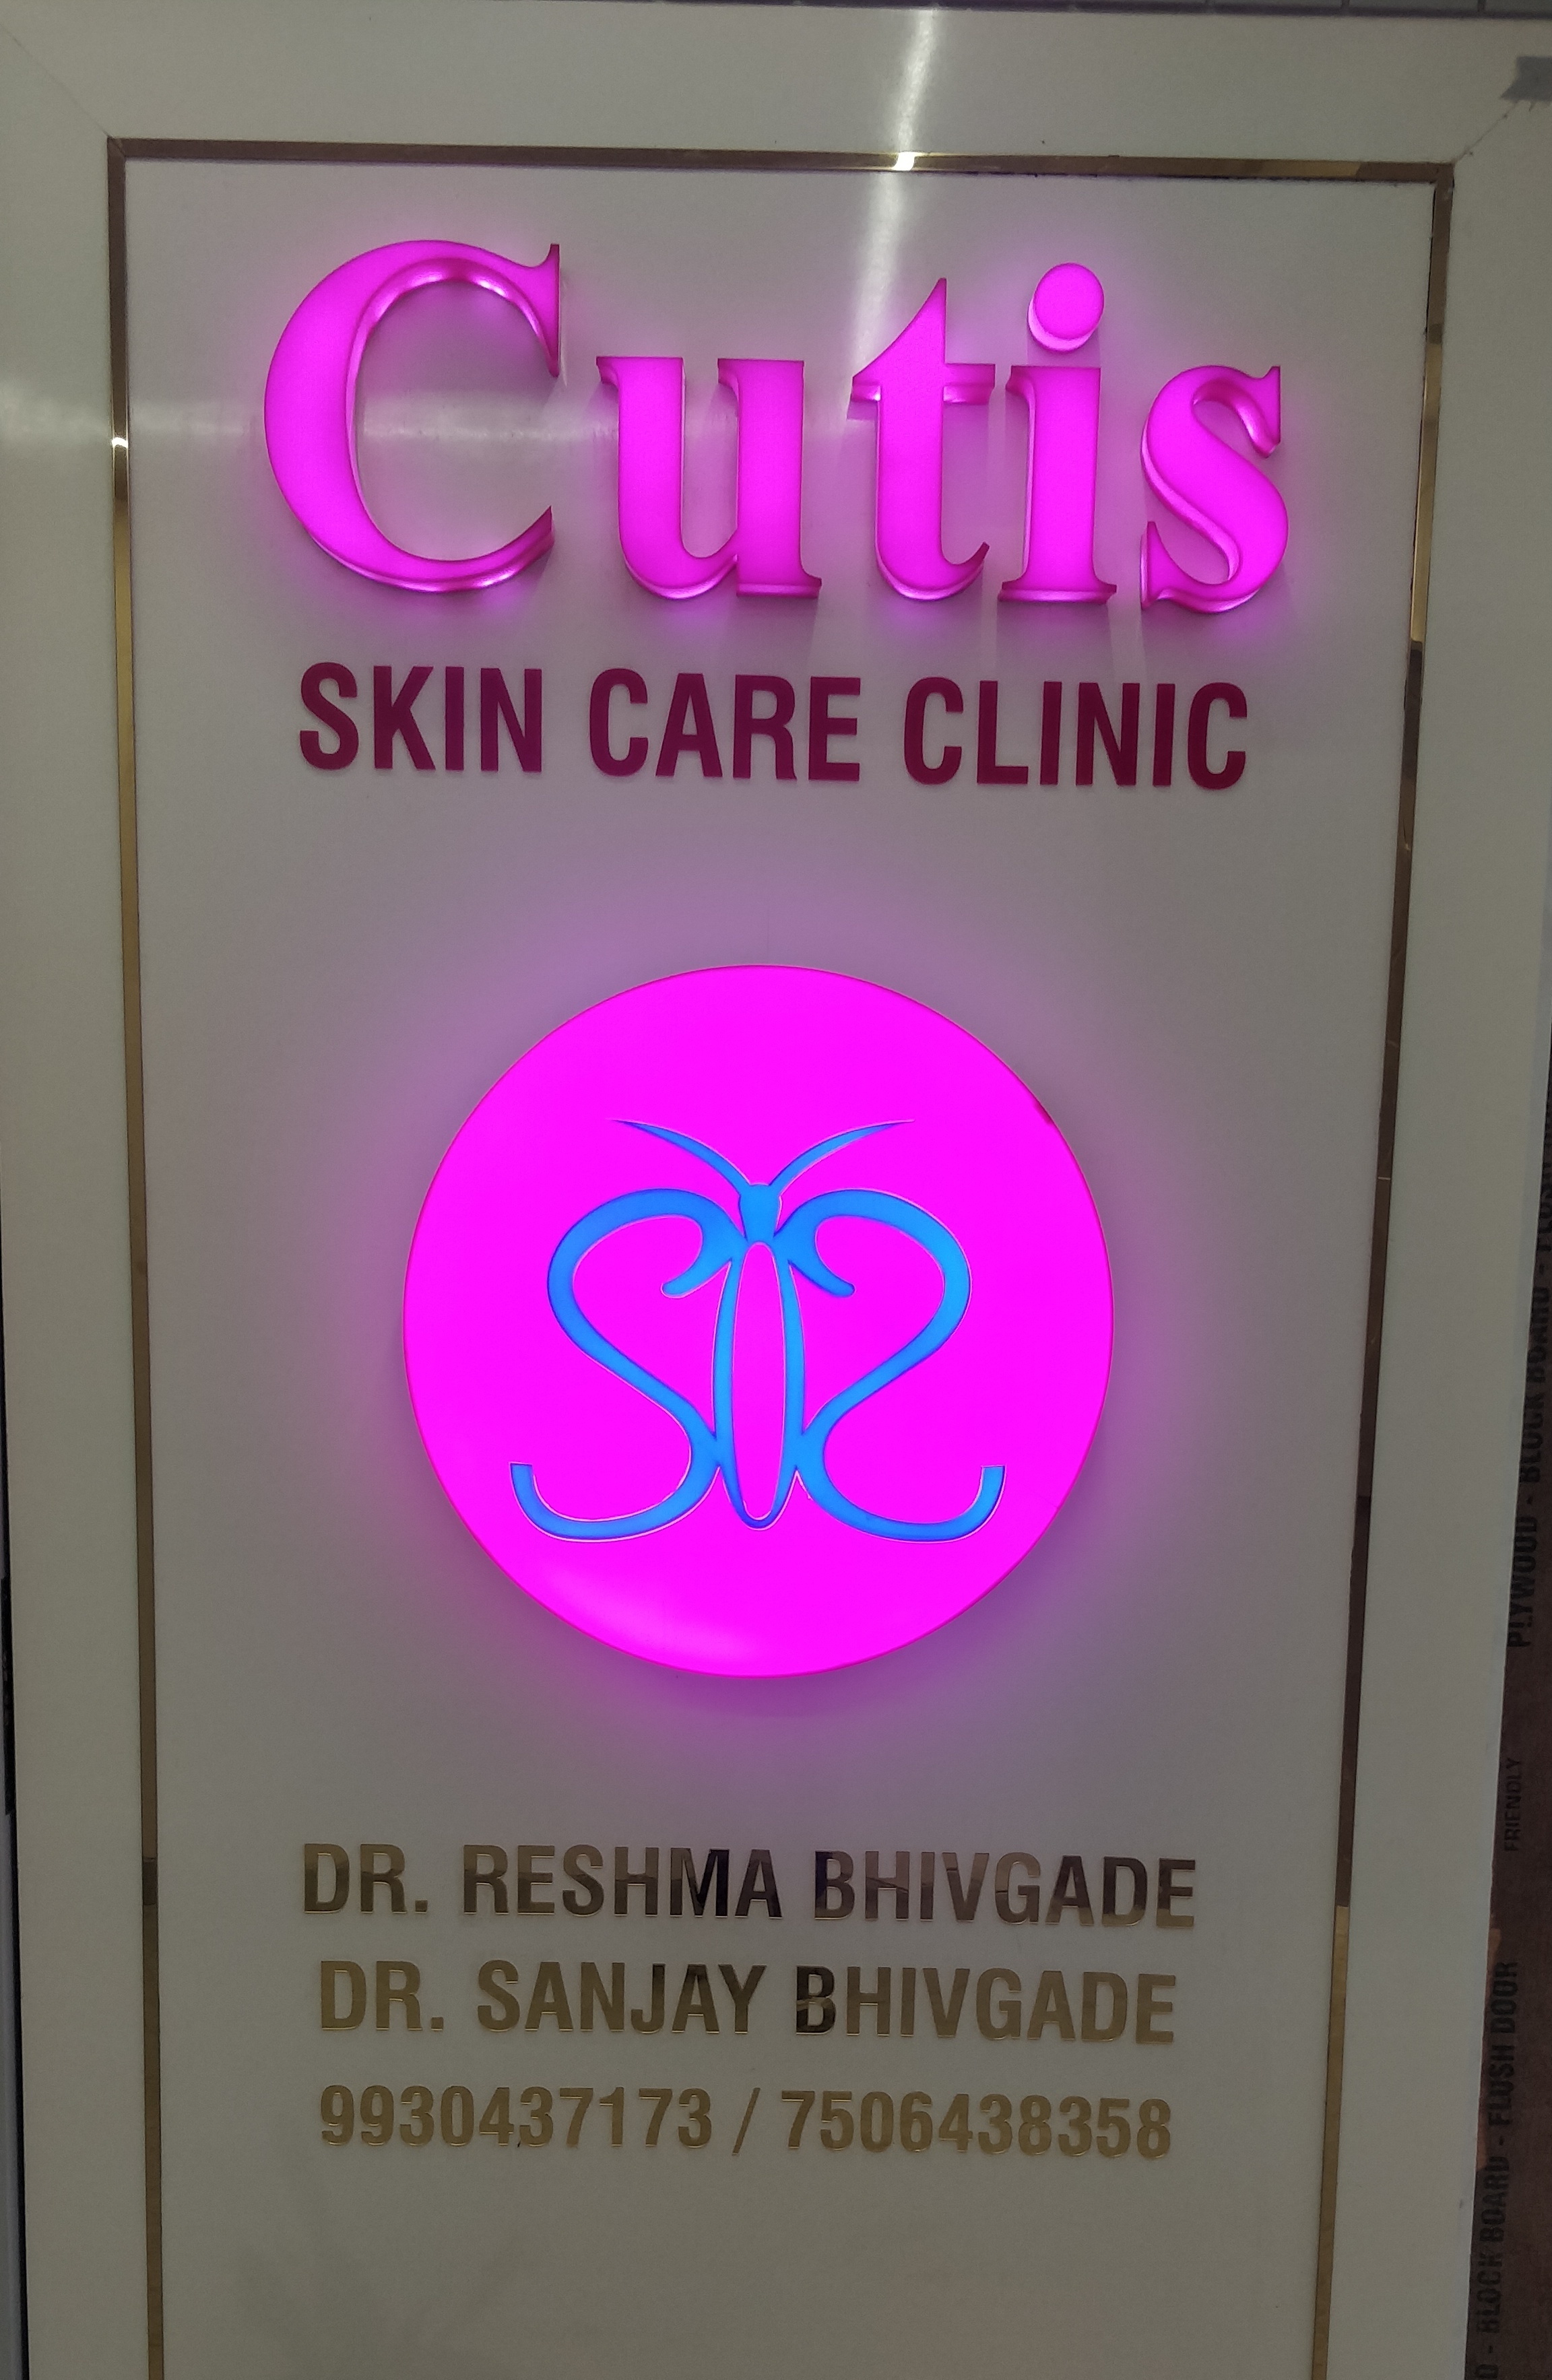 Dr. Reshma Bhivgade